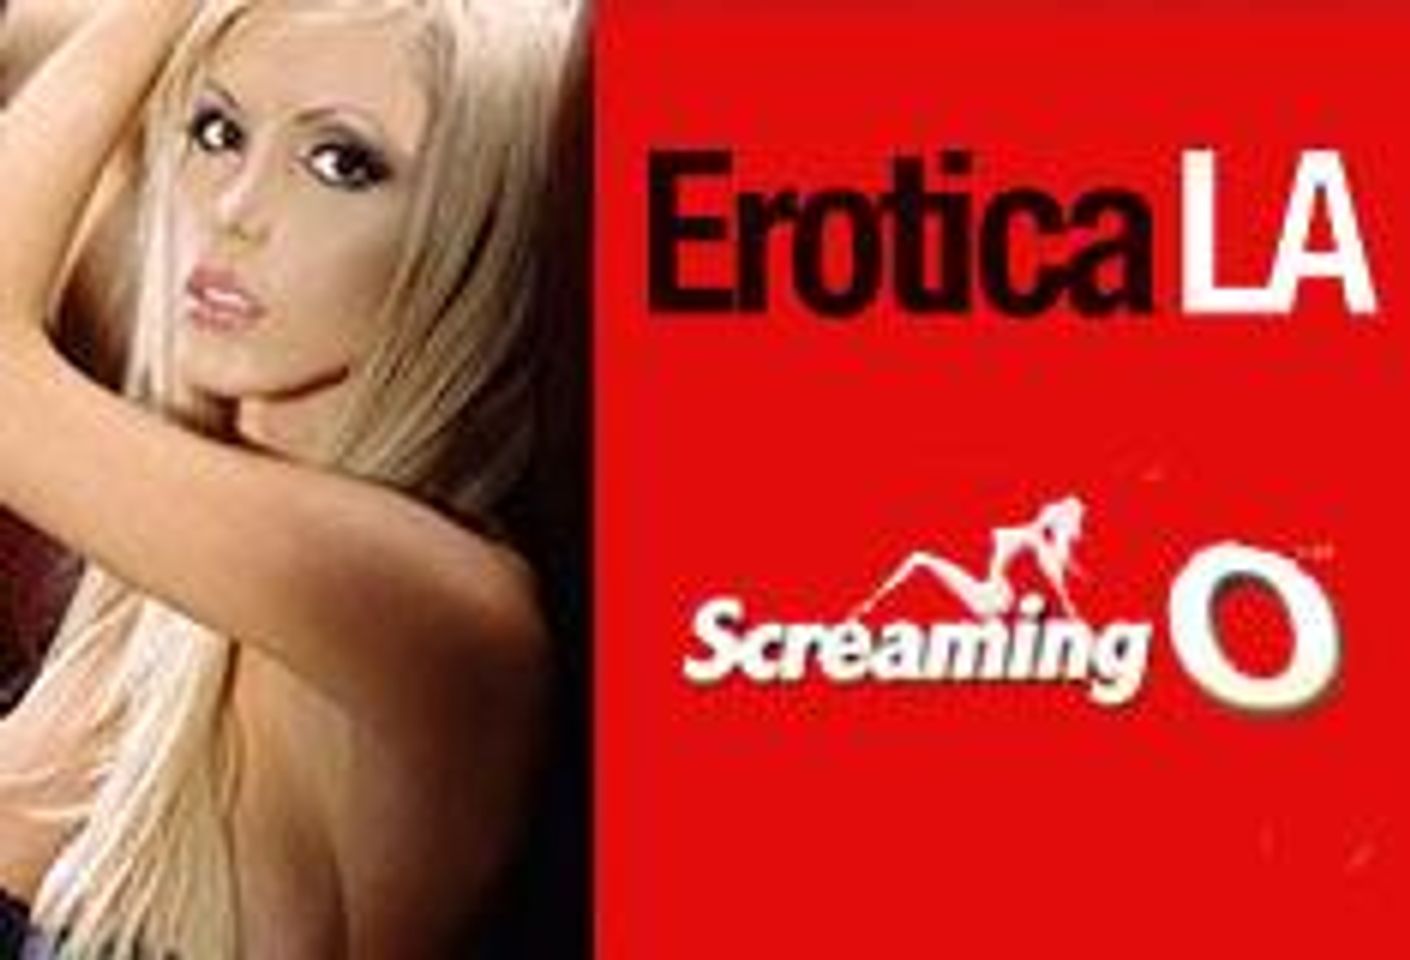 Nikki Benz to Host Contest at Erotica LA